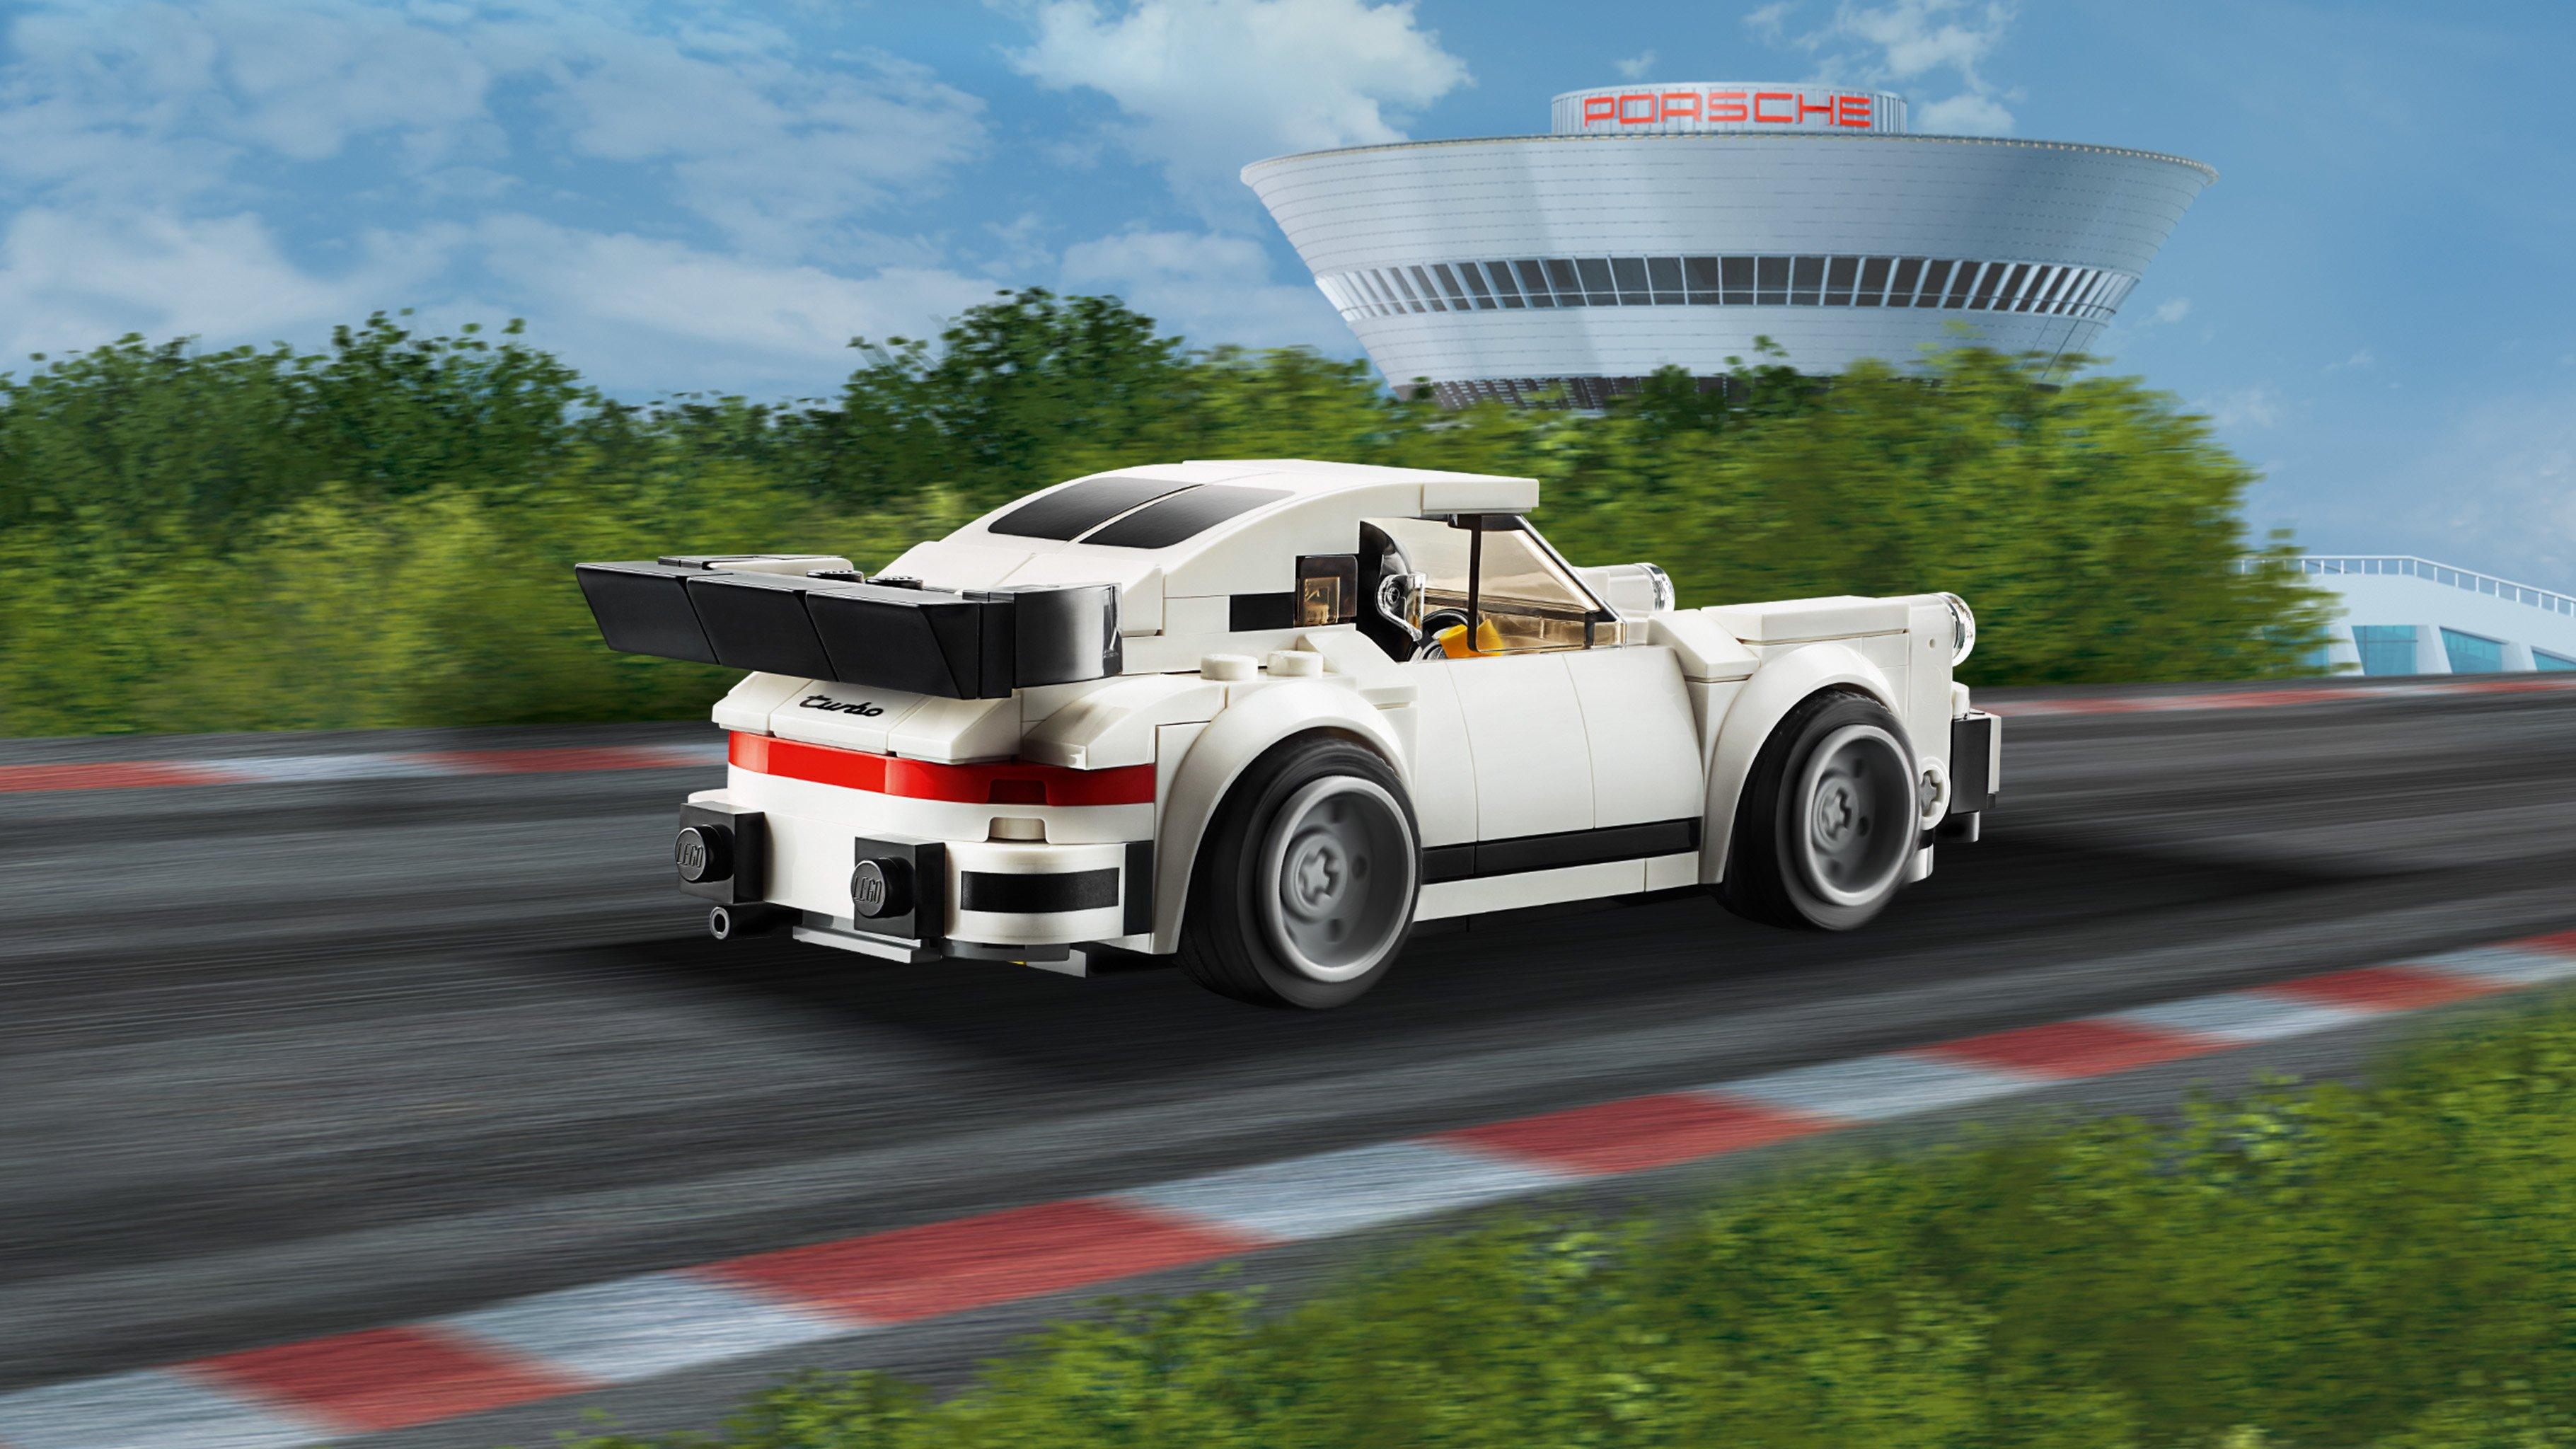 LEGO®  75895 1974 Porsche 911 Turbo 3.0 